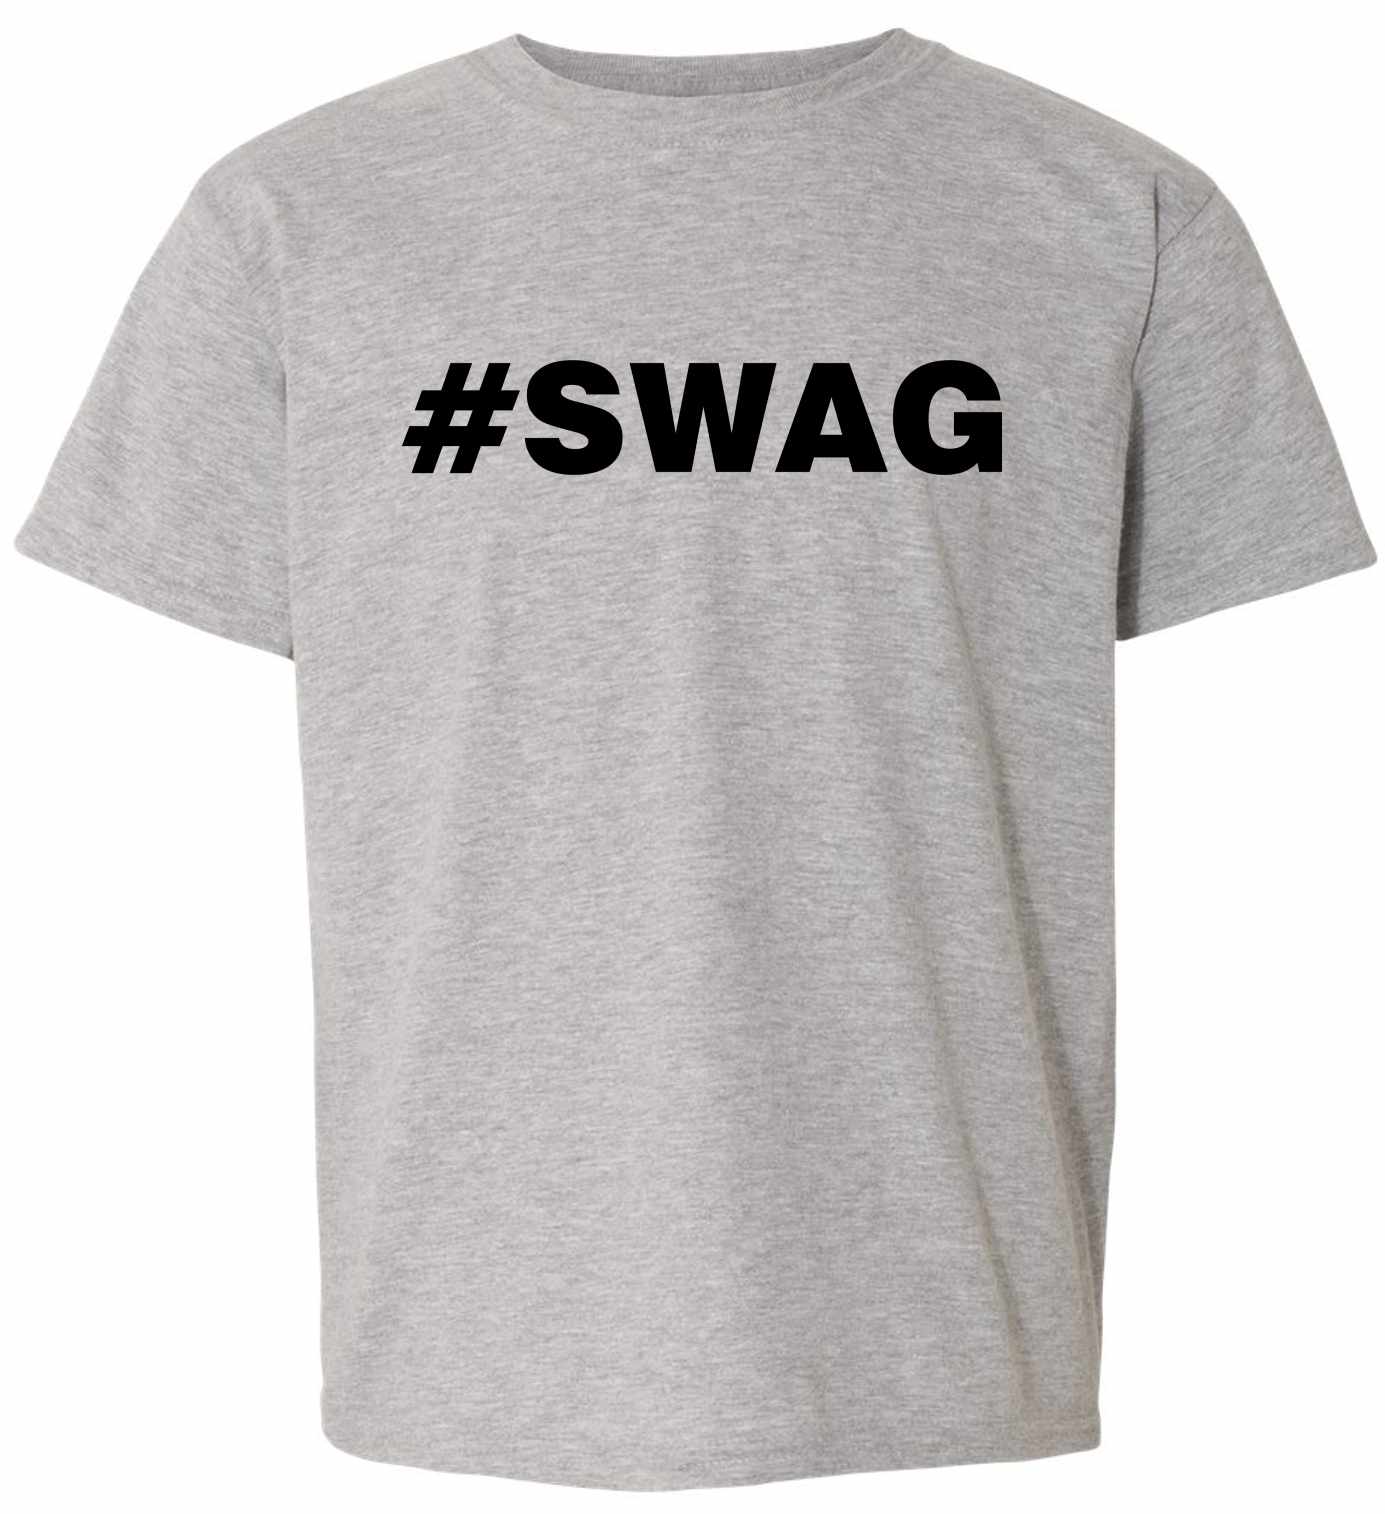 SWAG on Kids T-Shirt (#800-201)